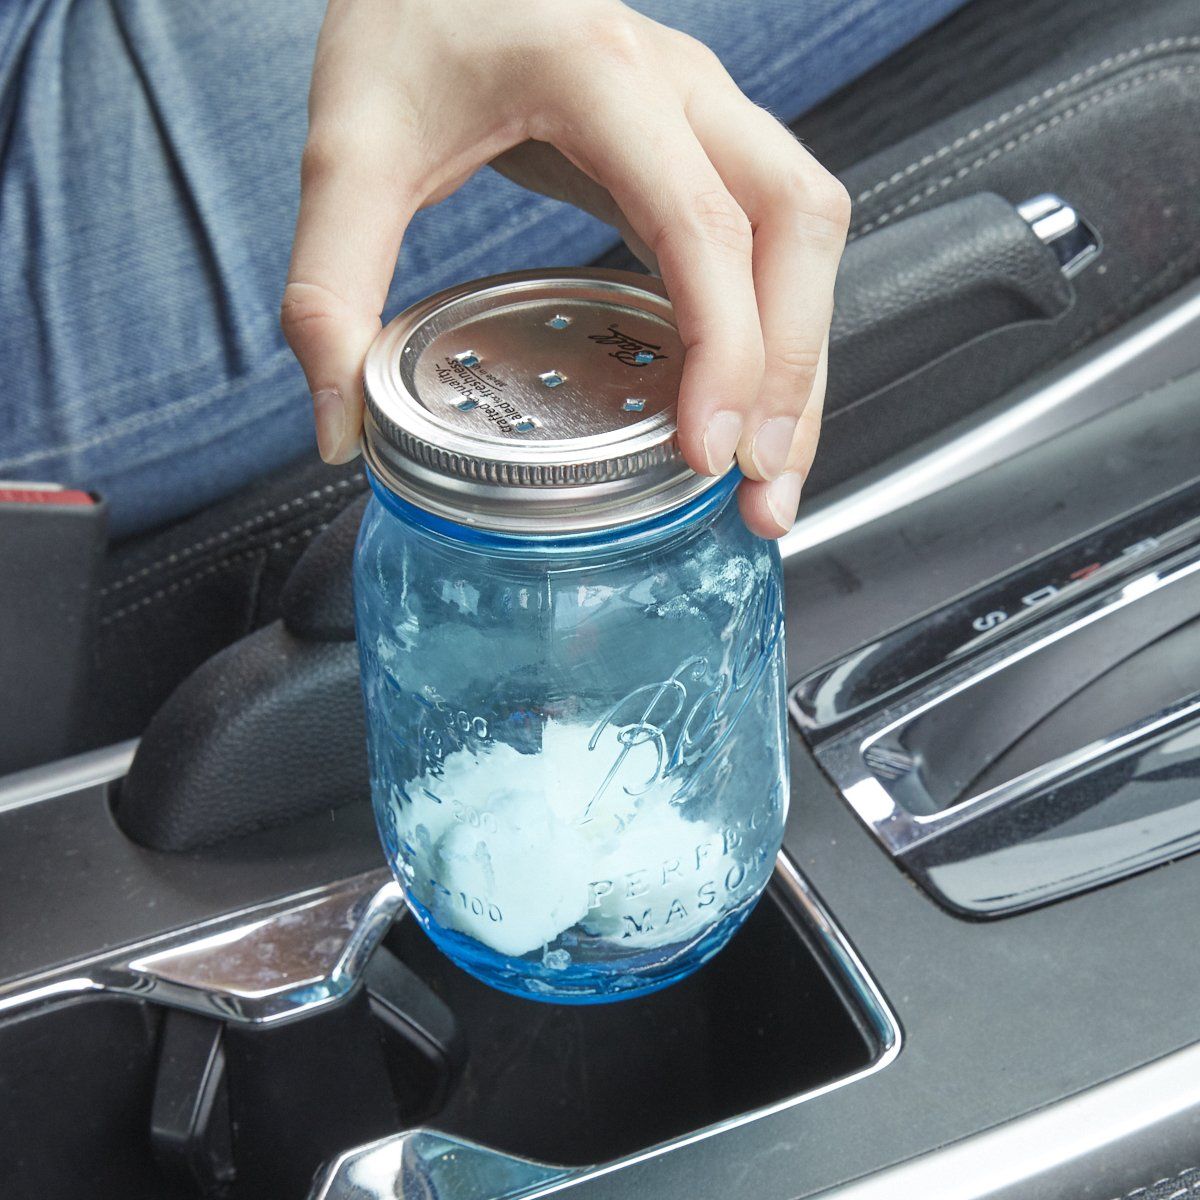 Make Your Own Car Air Freshener